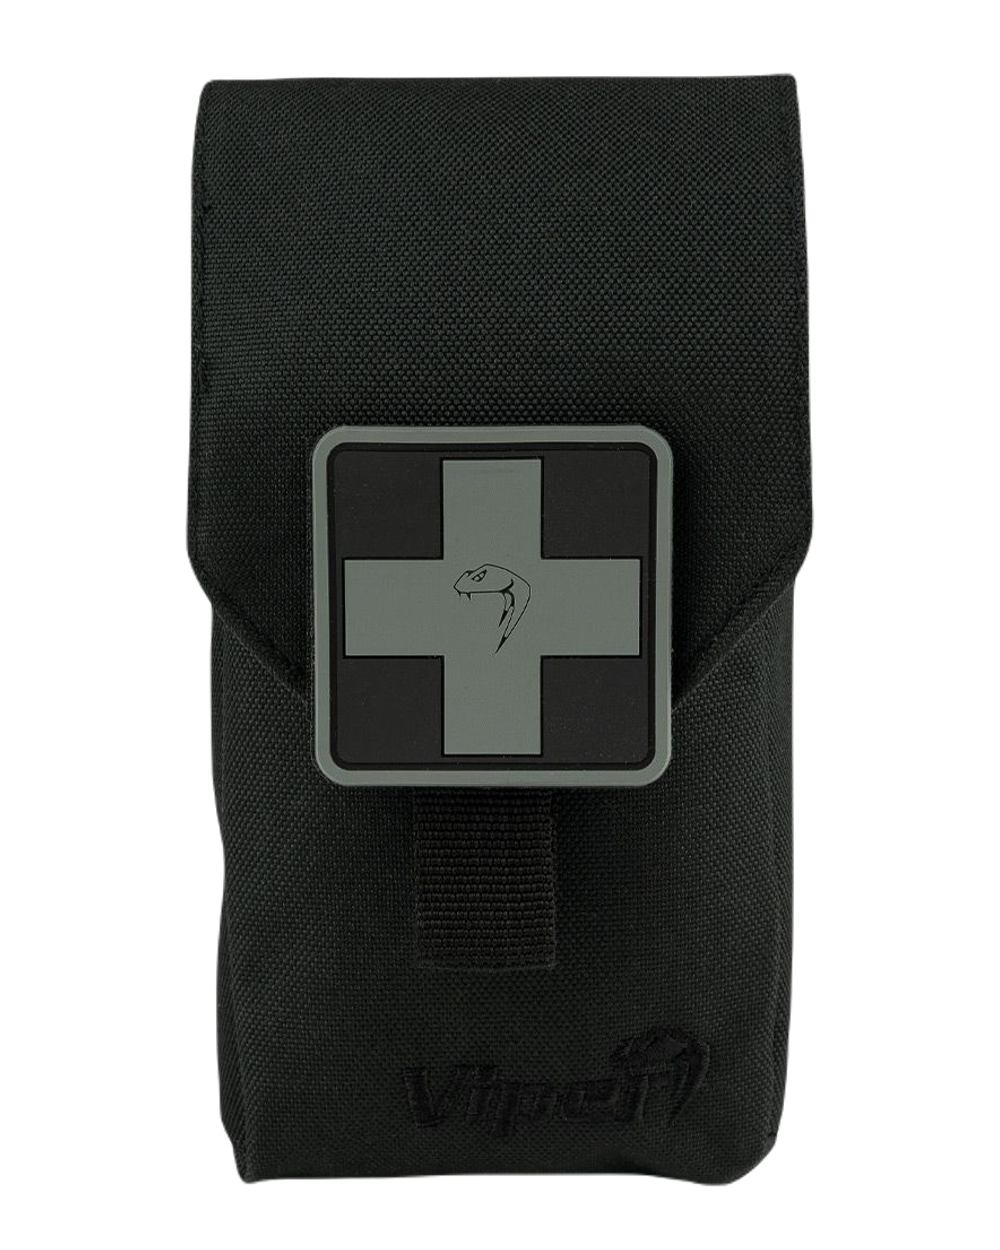 Viper First Aid Kit In Black 